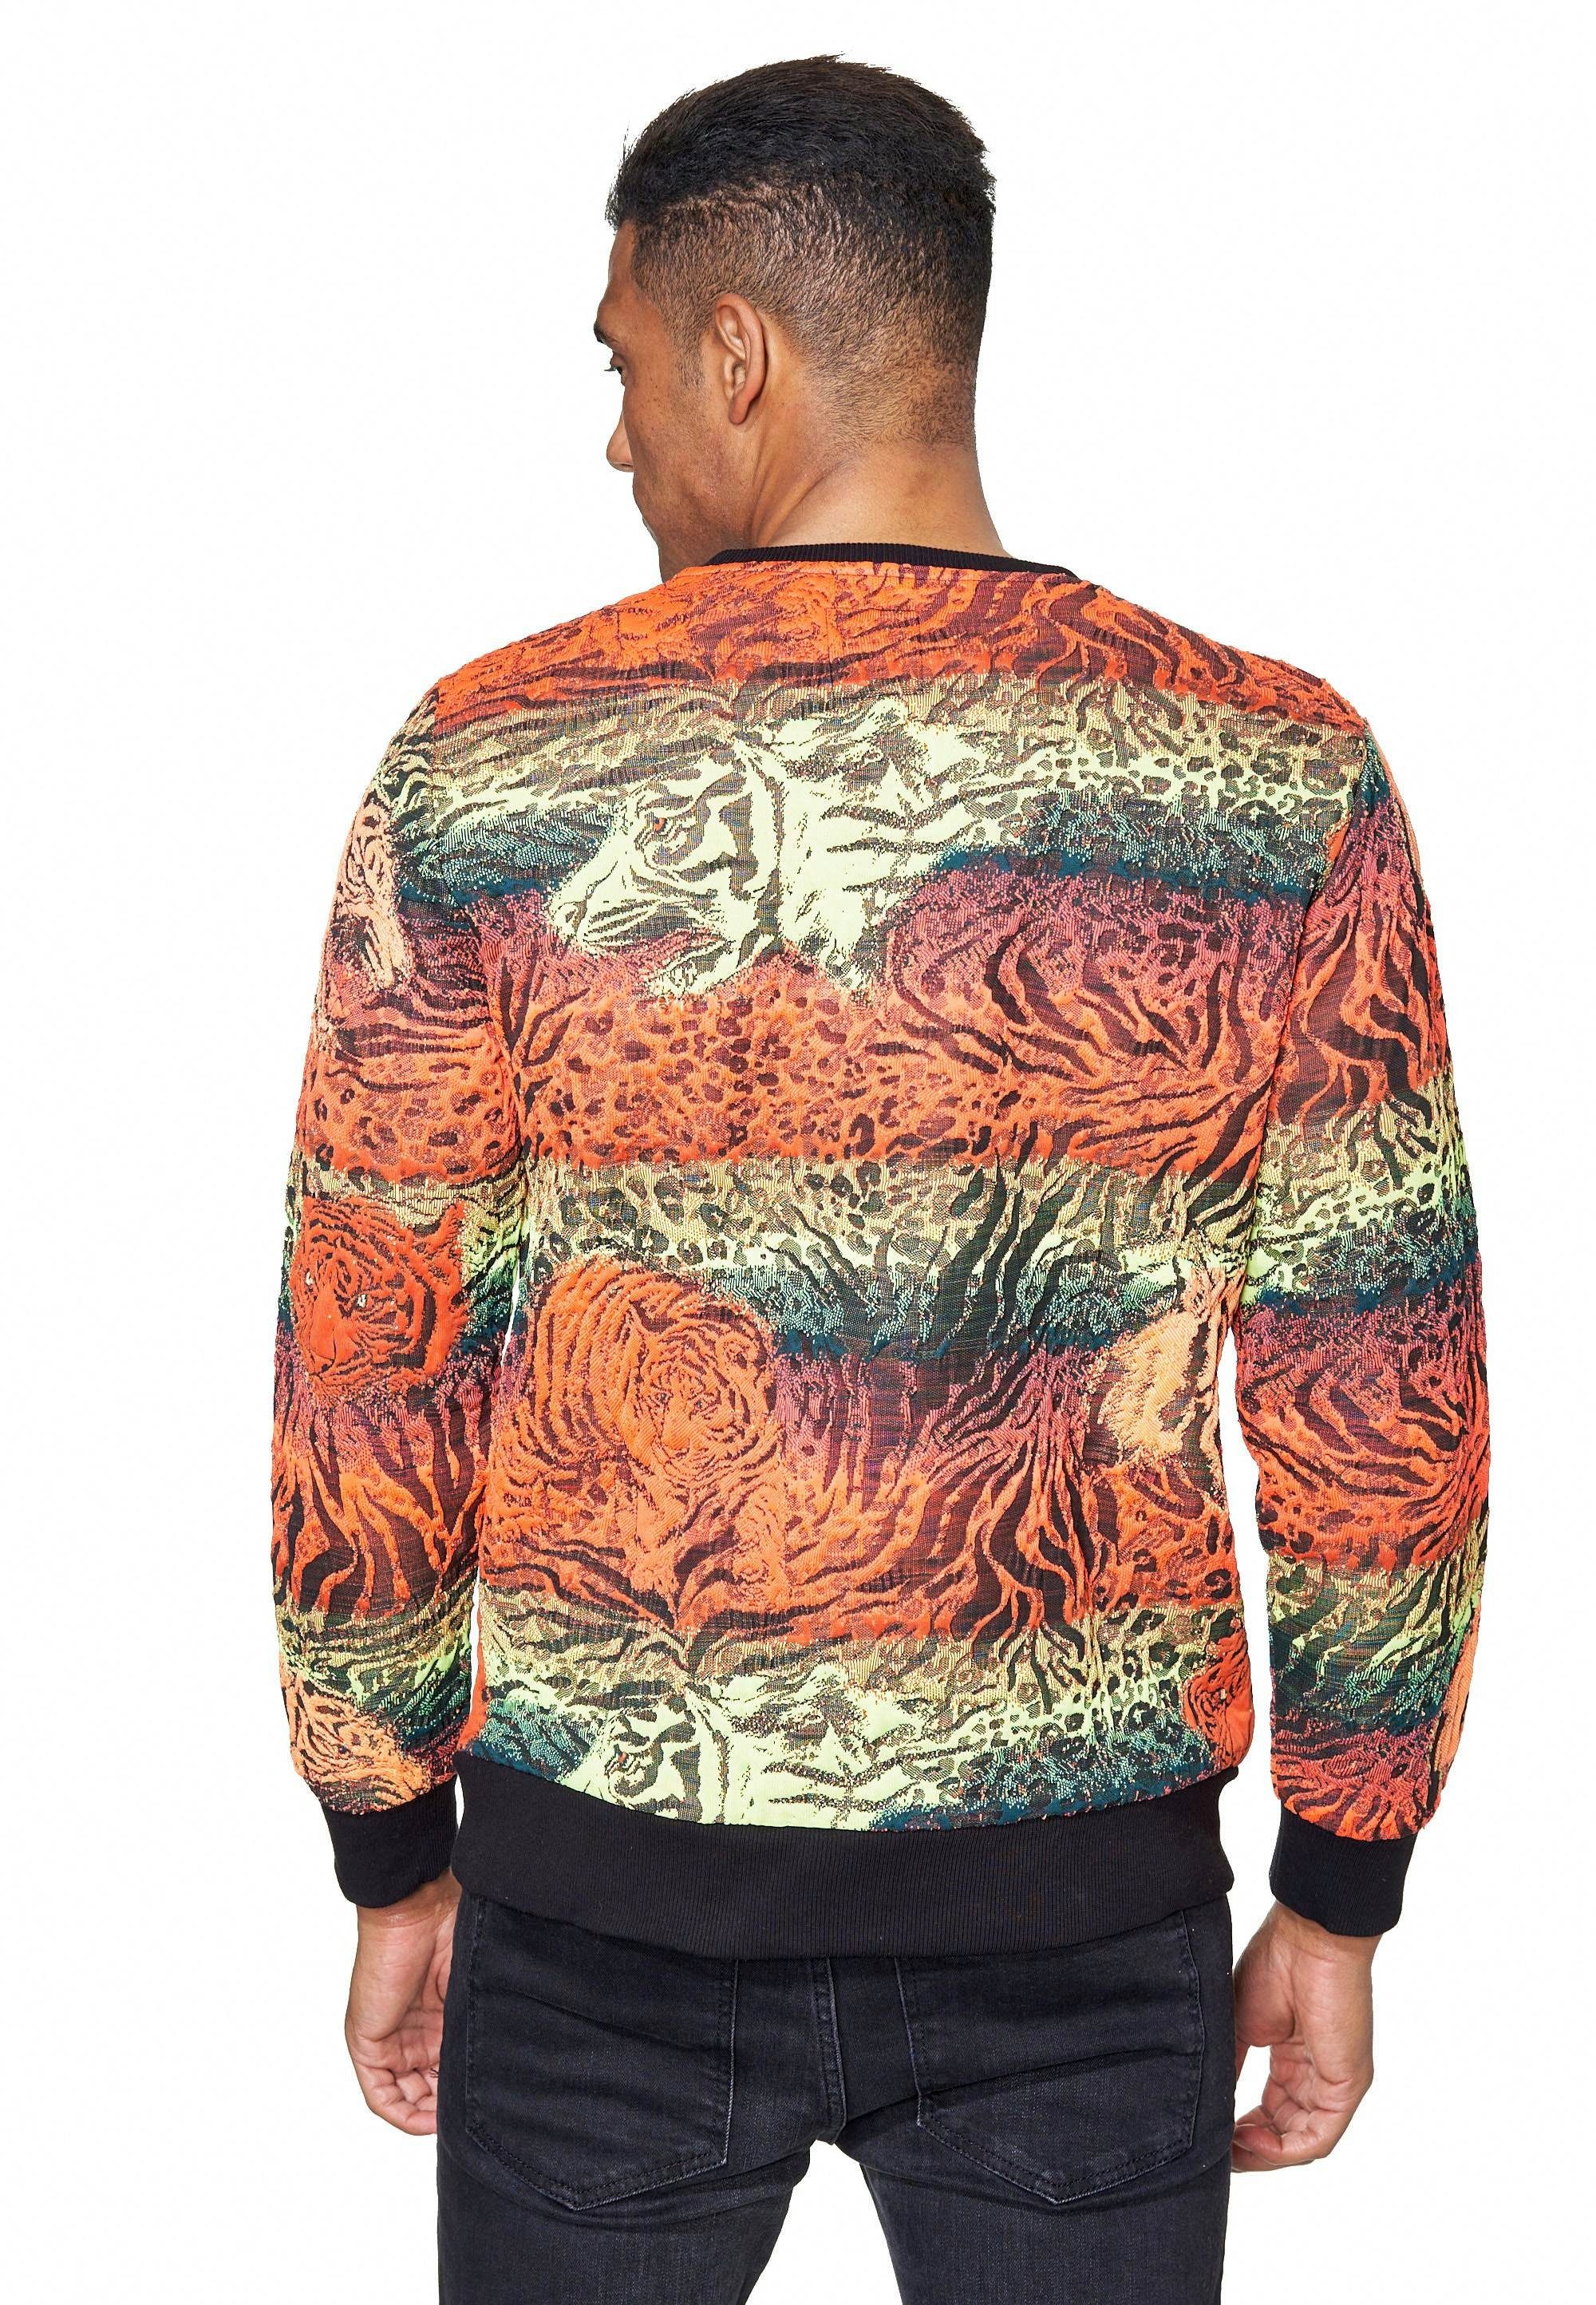 Sweatshirt Tiger-Design trendigen Sweater Neal im Rusty Neal Rusty